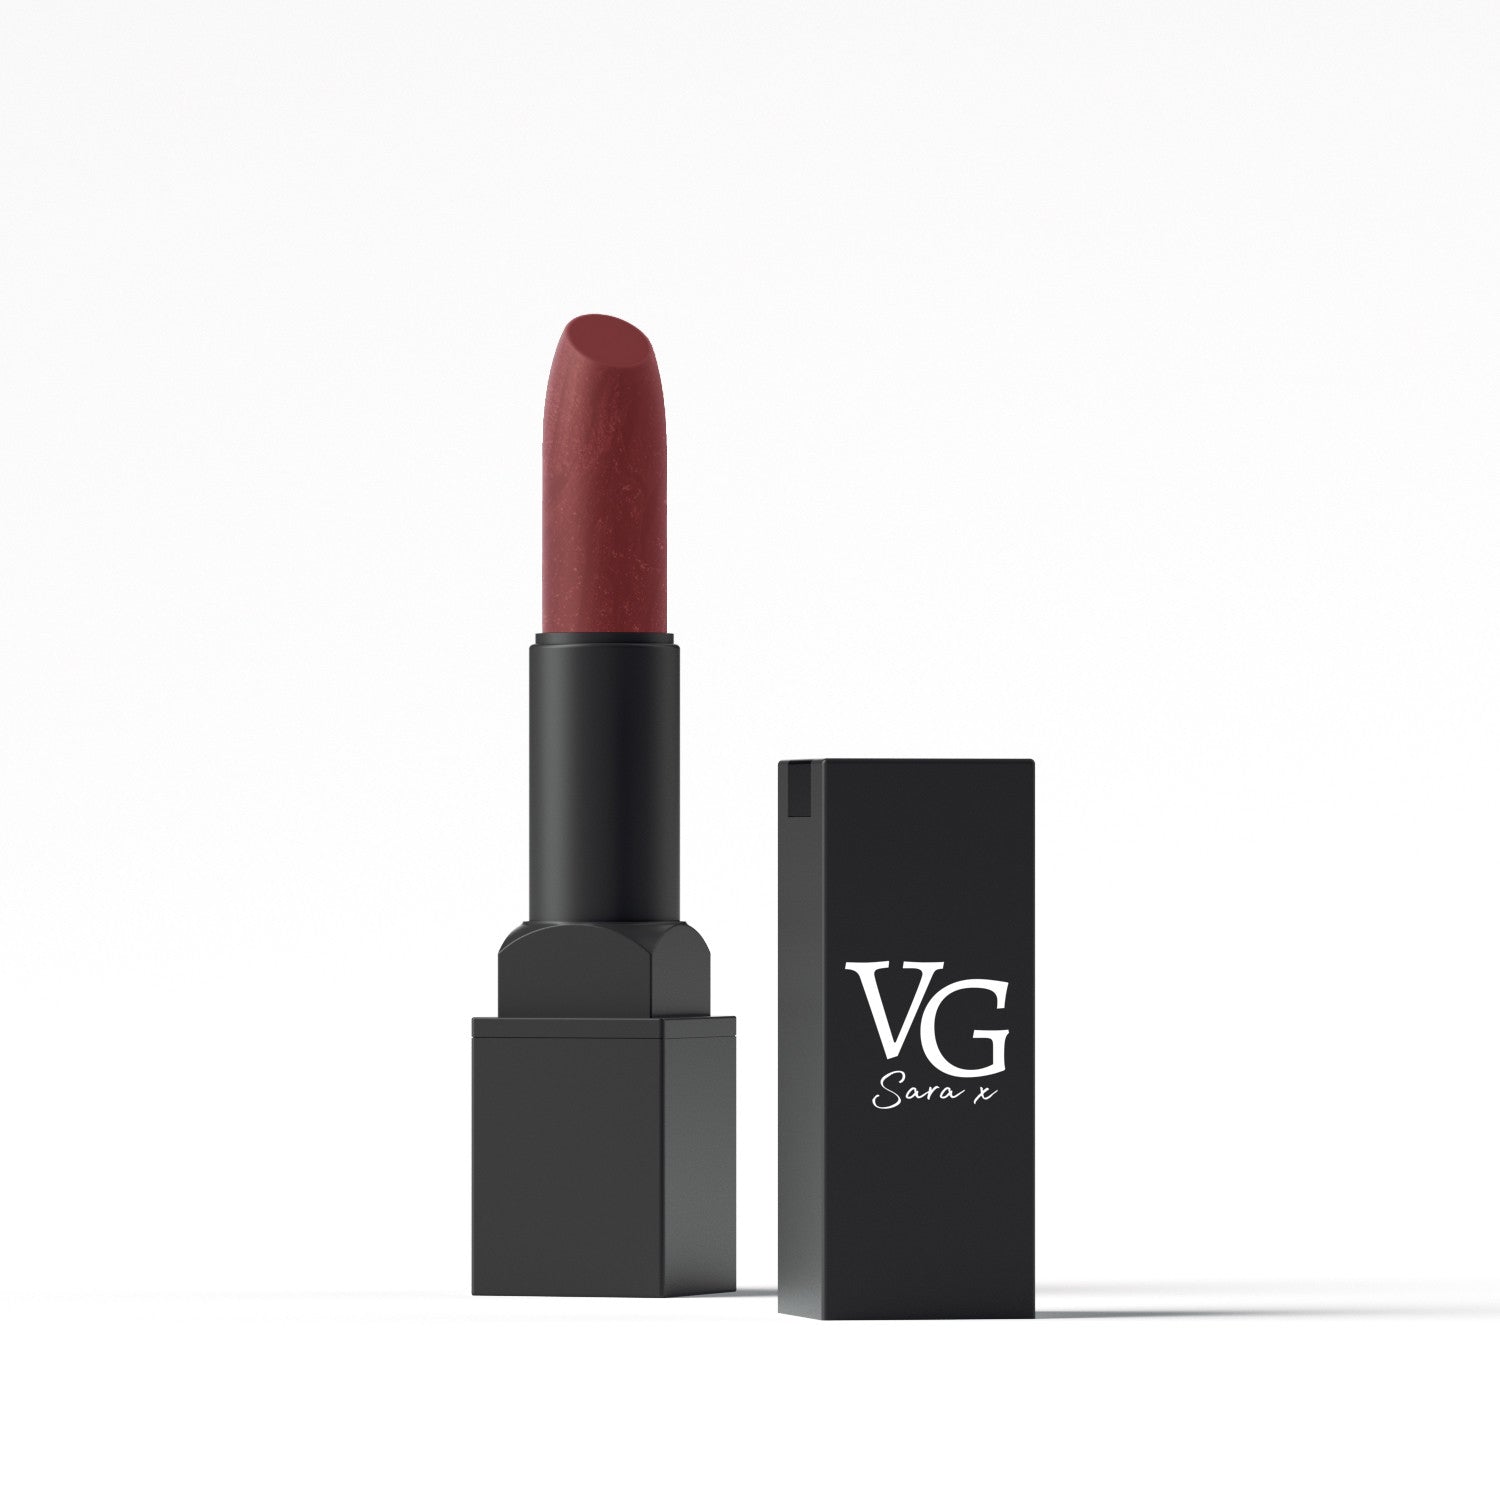 VG Cosmetics lipstick displayed with elegant black packaging